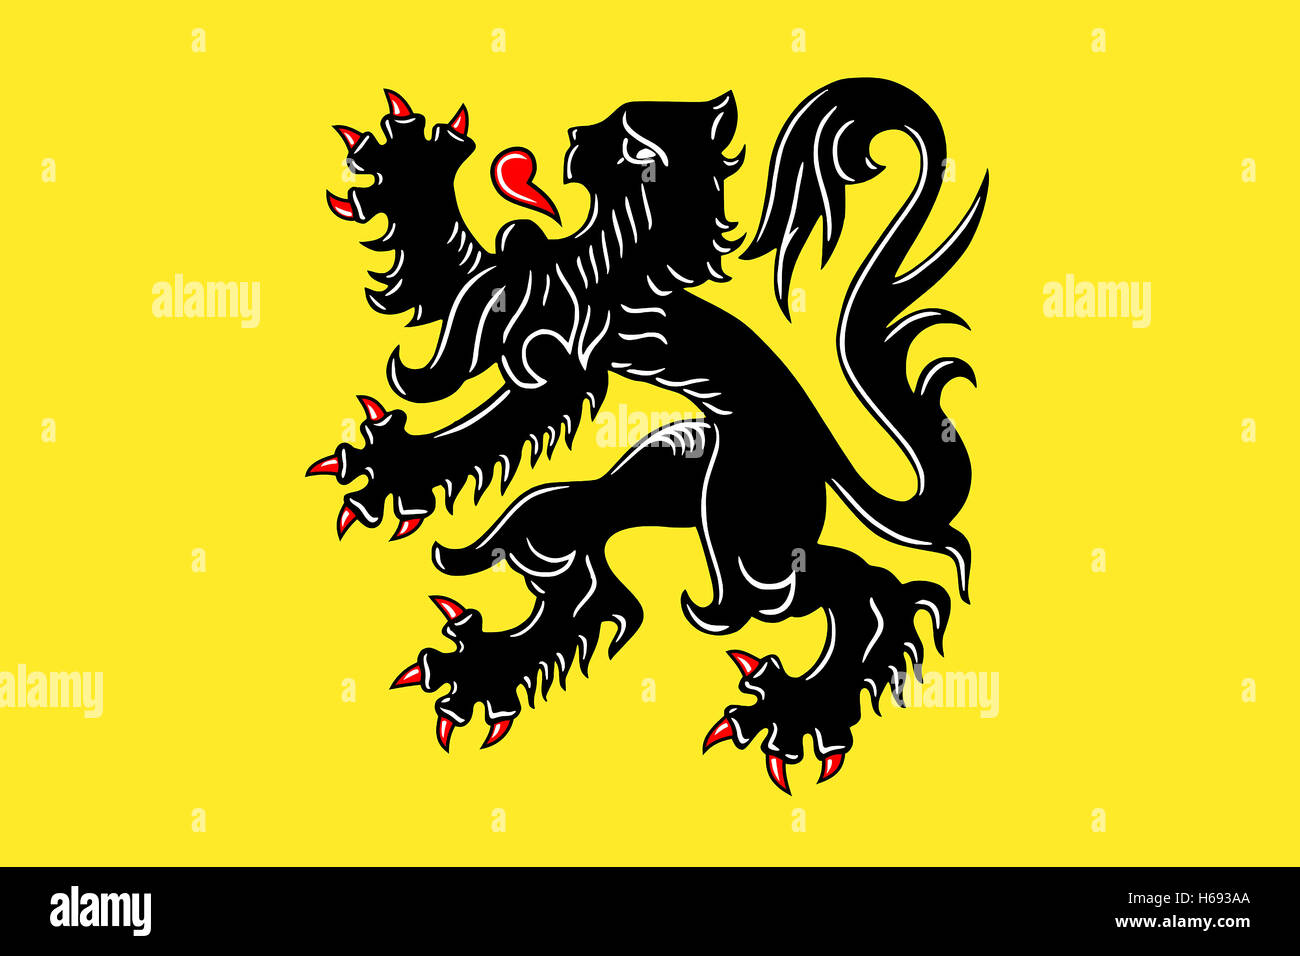 Flag of the Belgian region of Flanders in Belgium. Stock Photo